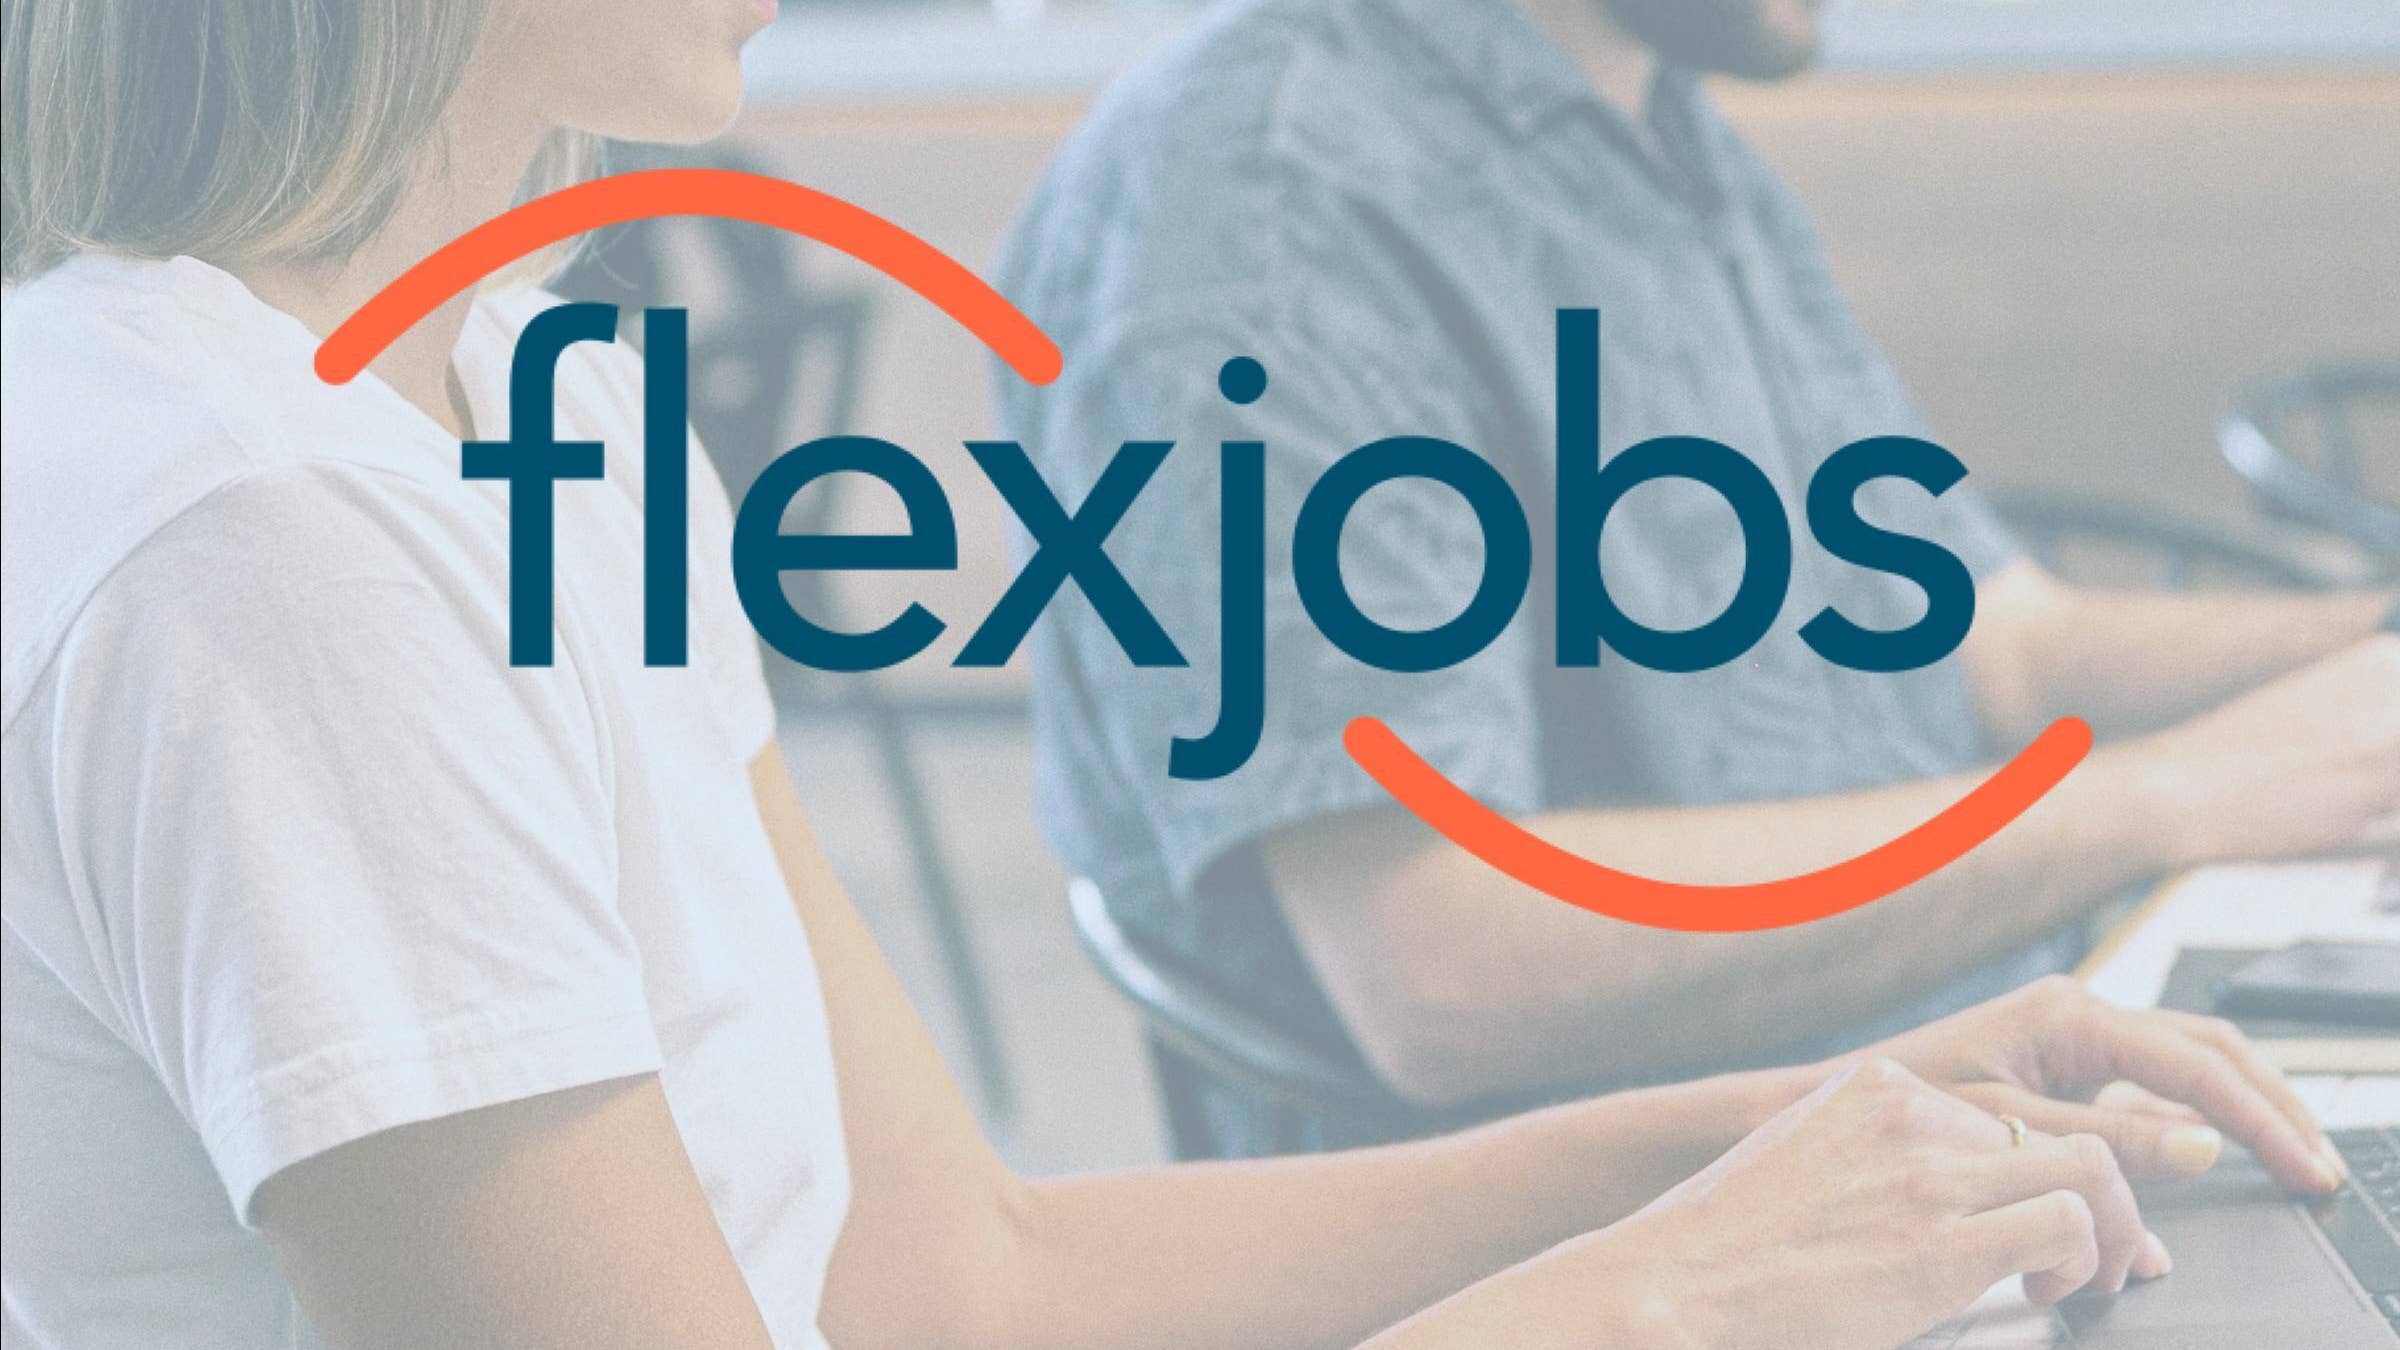 flexjobs